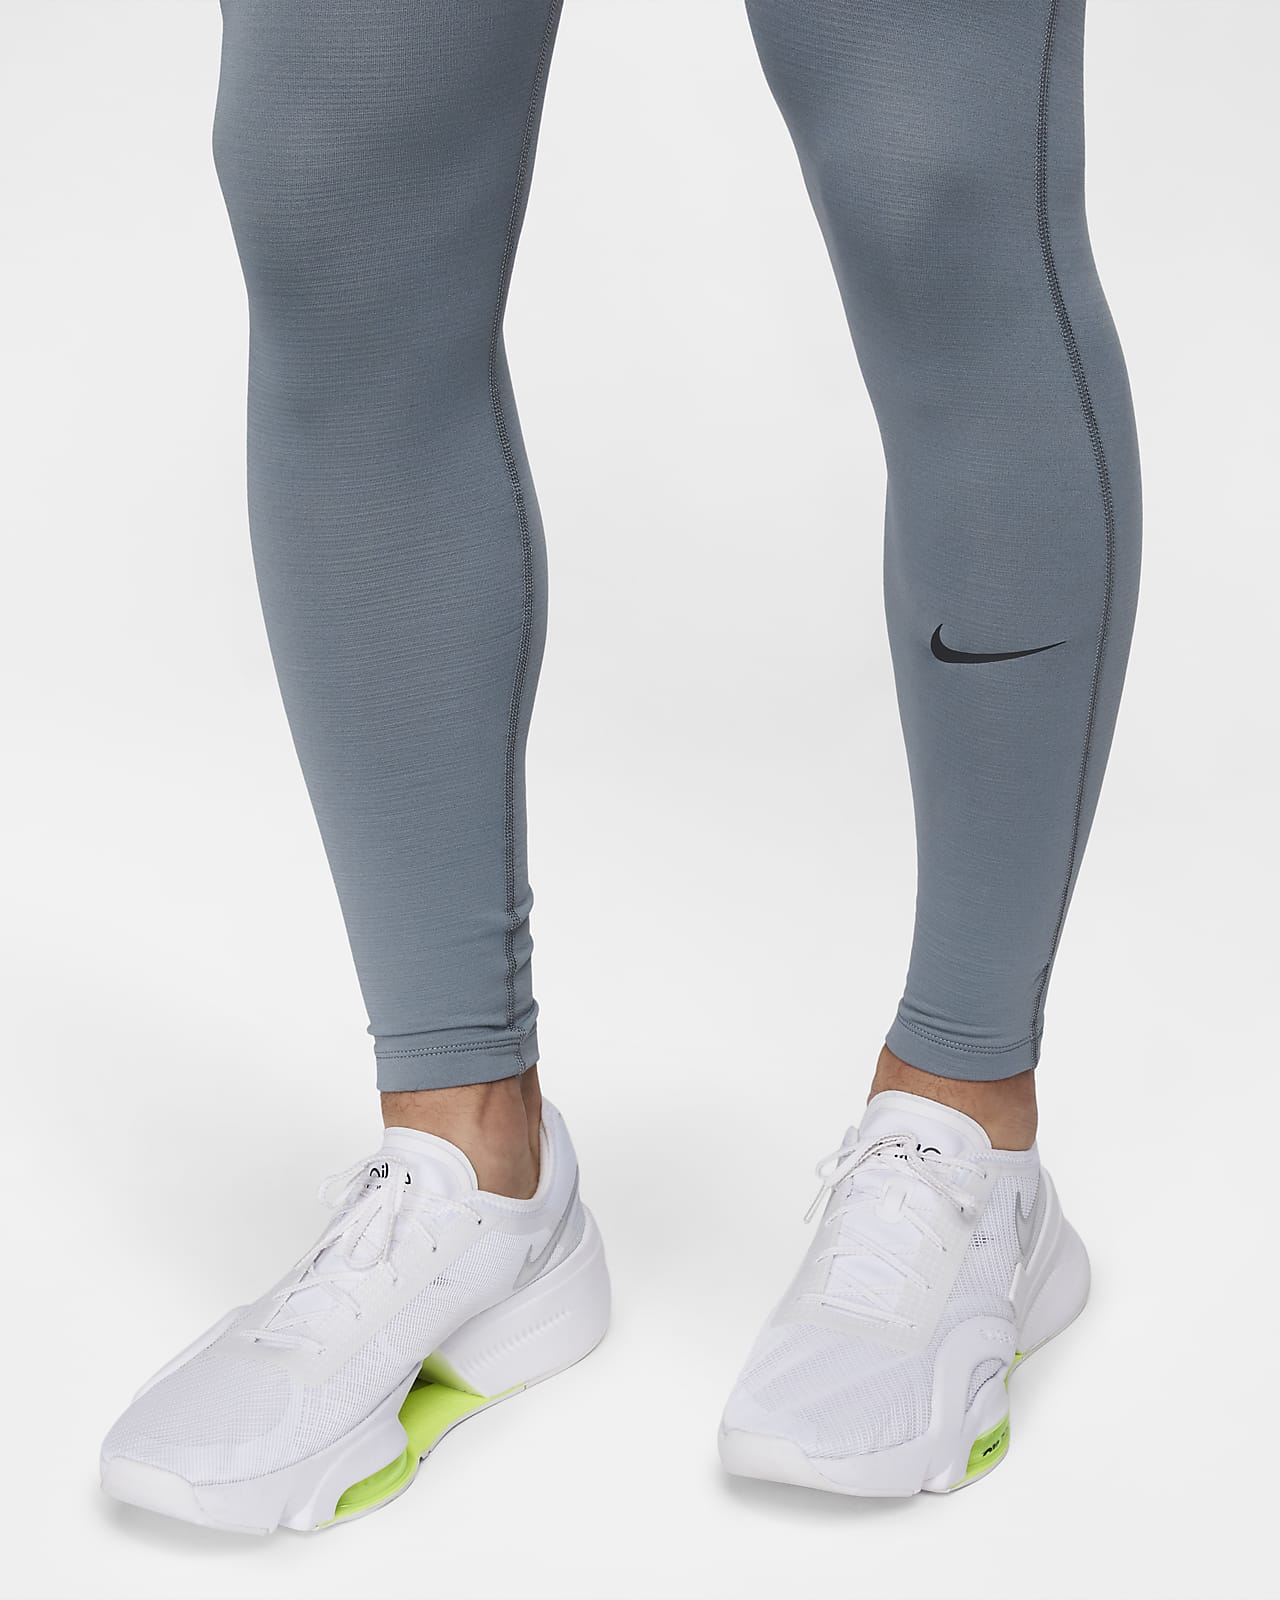 Nike Pro Spodnie i legginsy. Nike PL